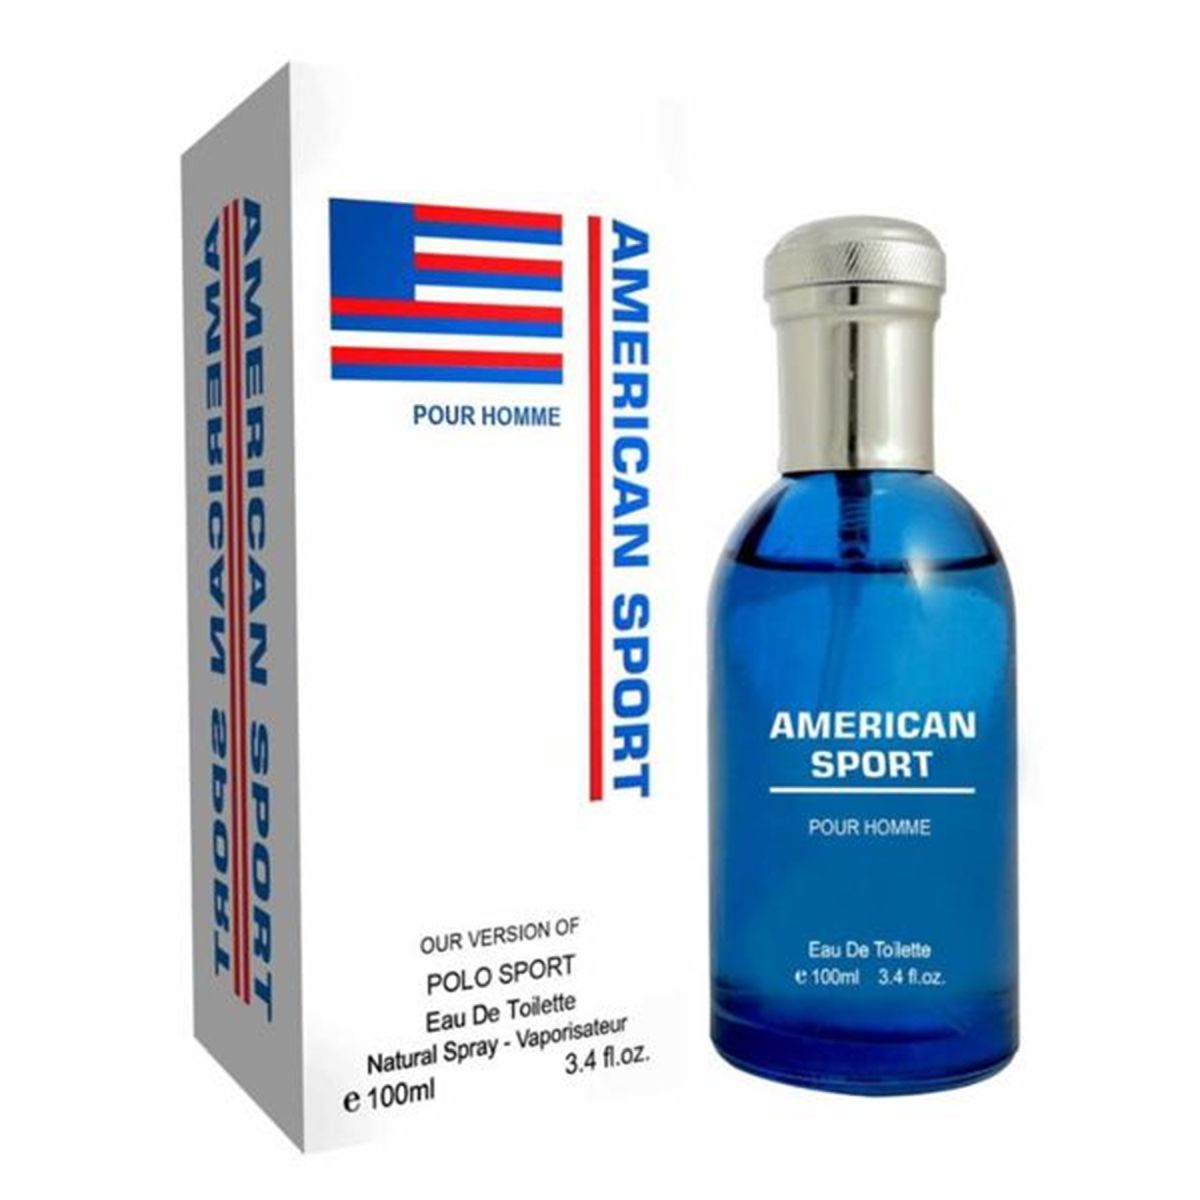 American Sport – Polo Sport Pour Homme, Version, Type, Alternative